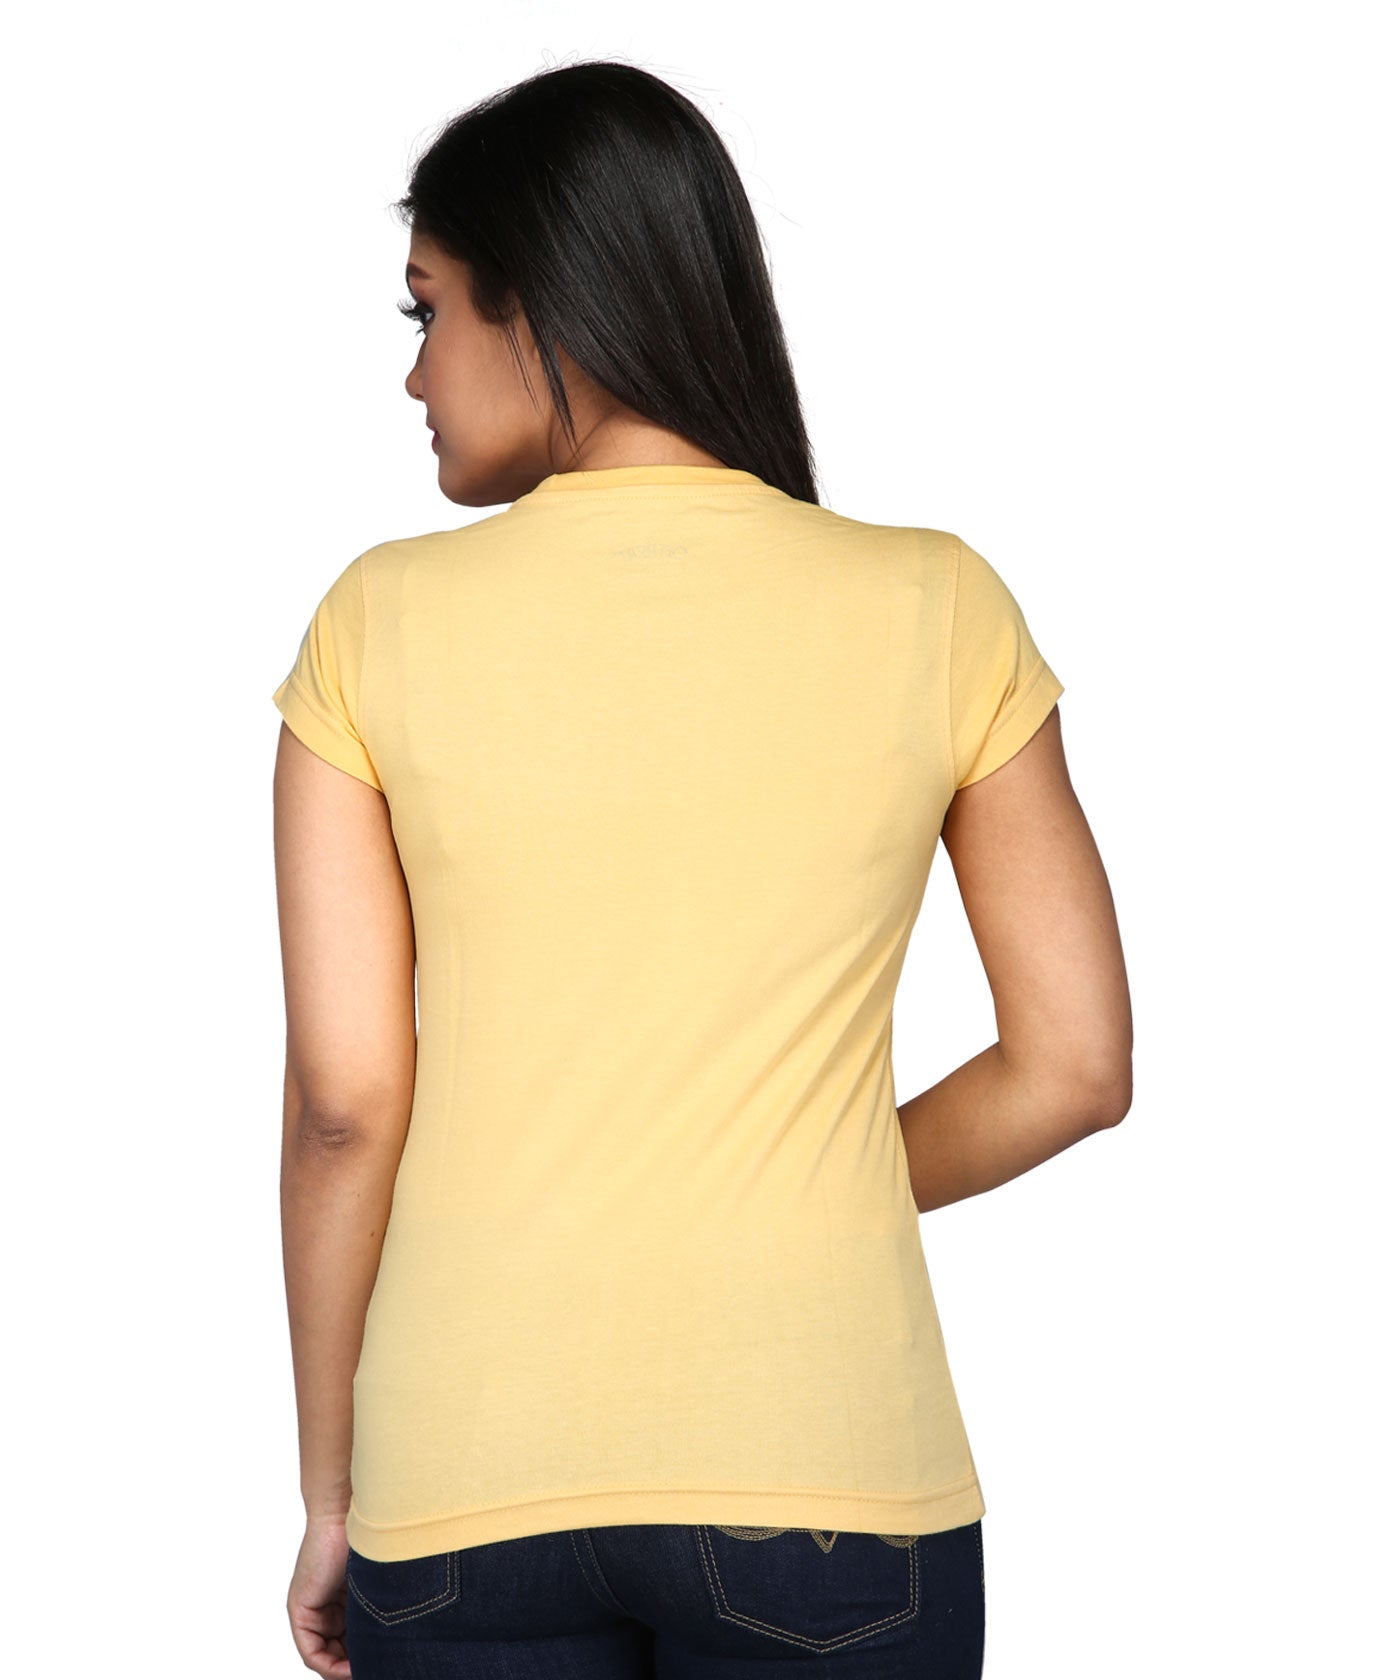 Half Print - Block Print Tees for Women - Golden Yellow